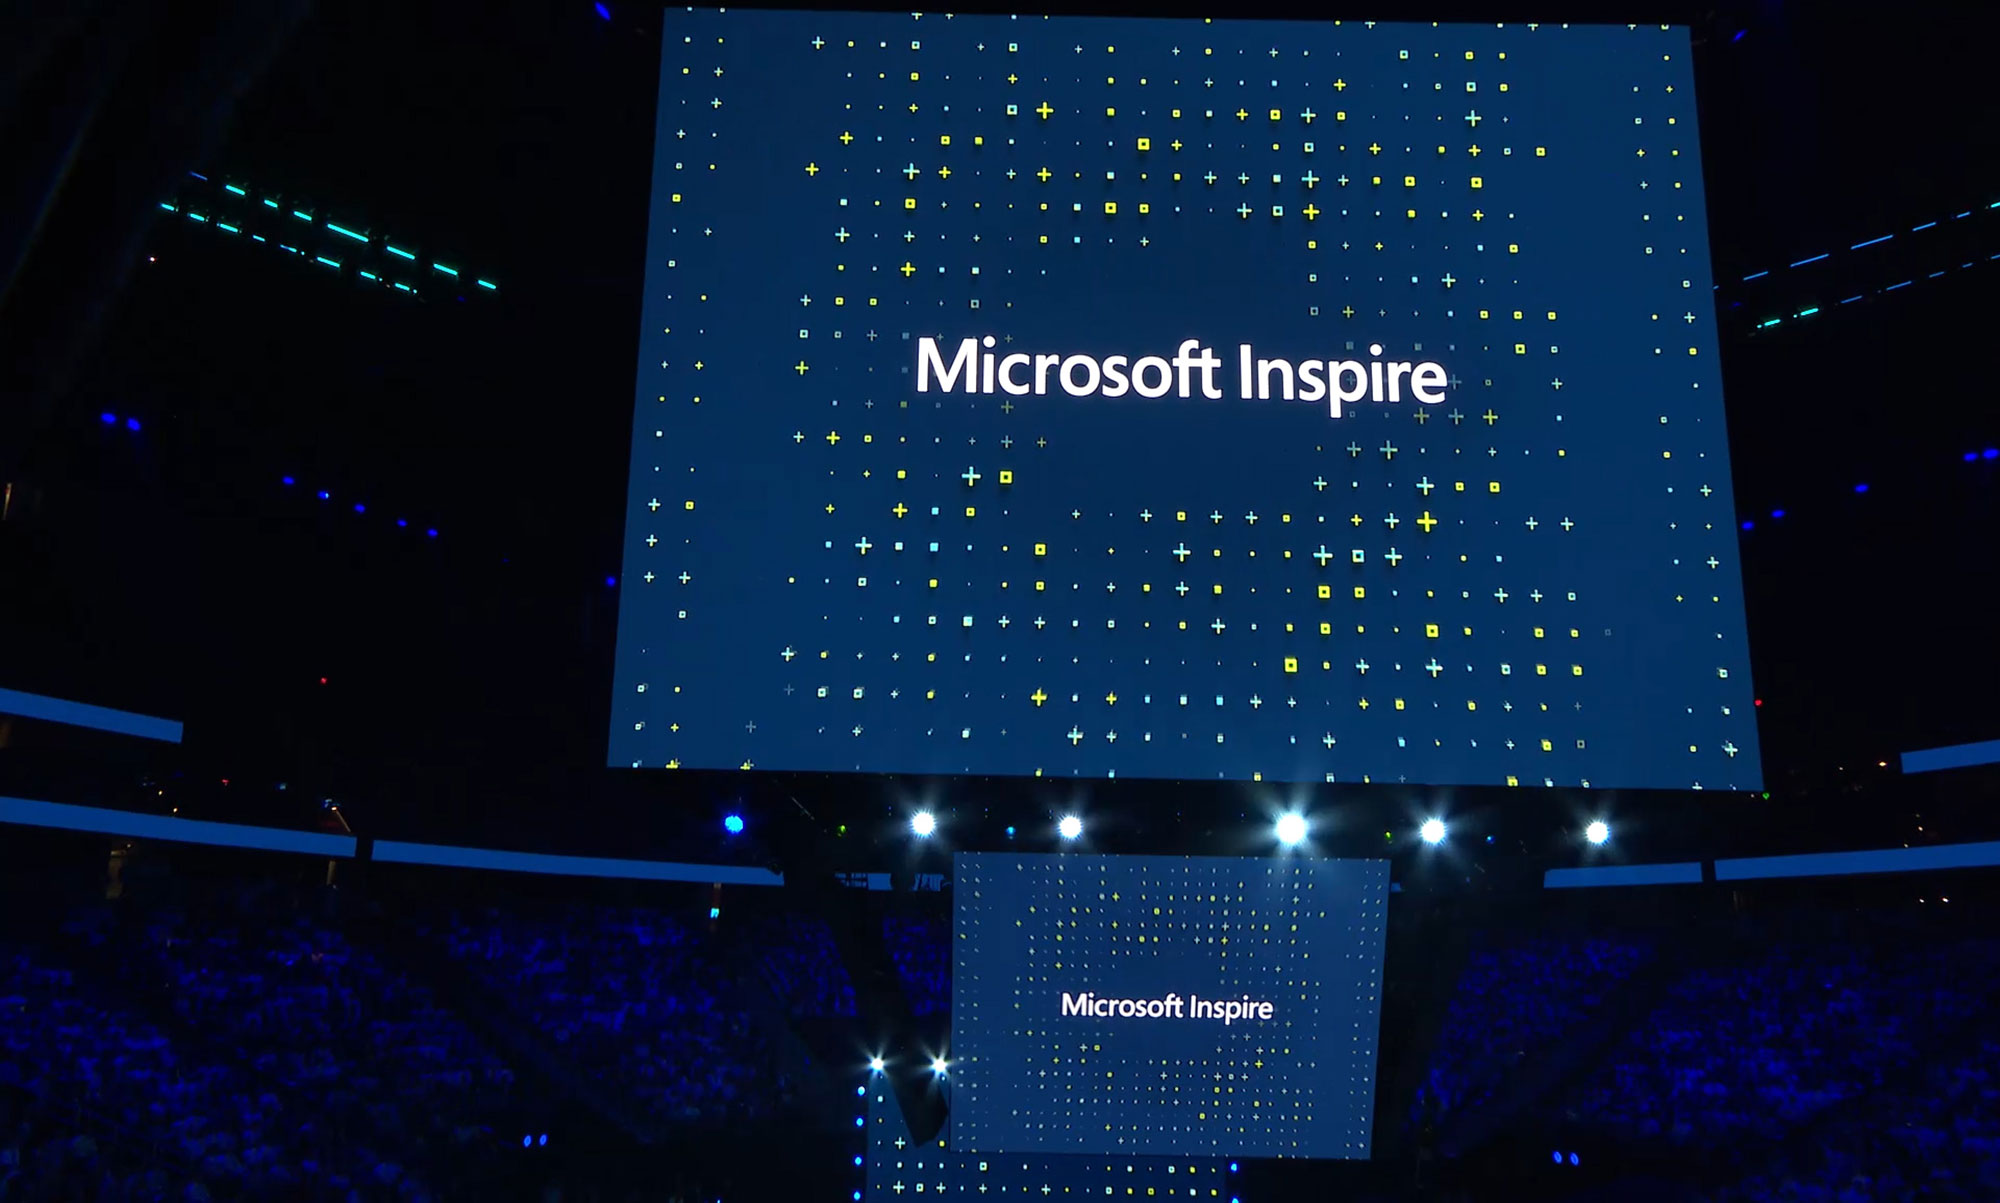 Microsoft Inspire signage